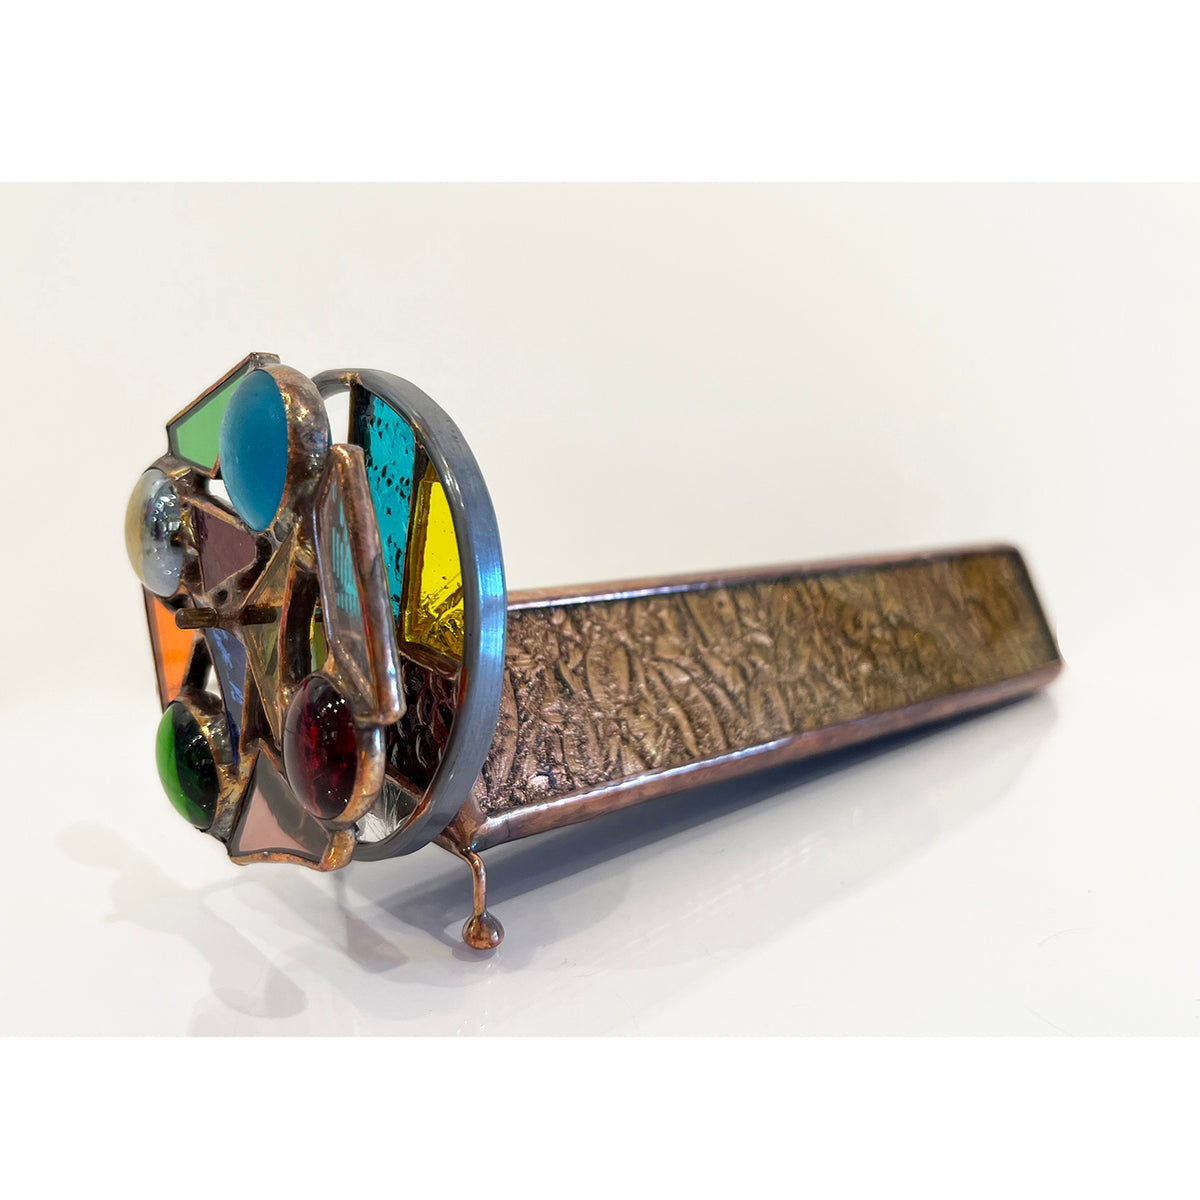 John Cooper - Sm Textured Copper Kscope